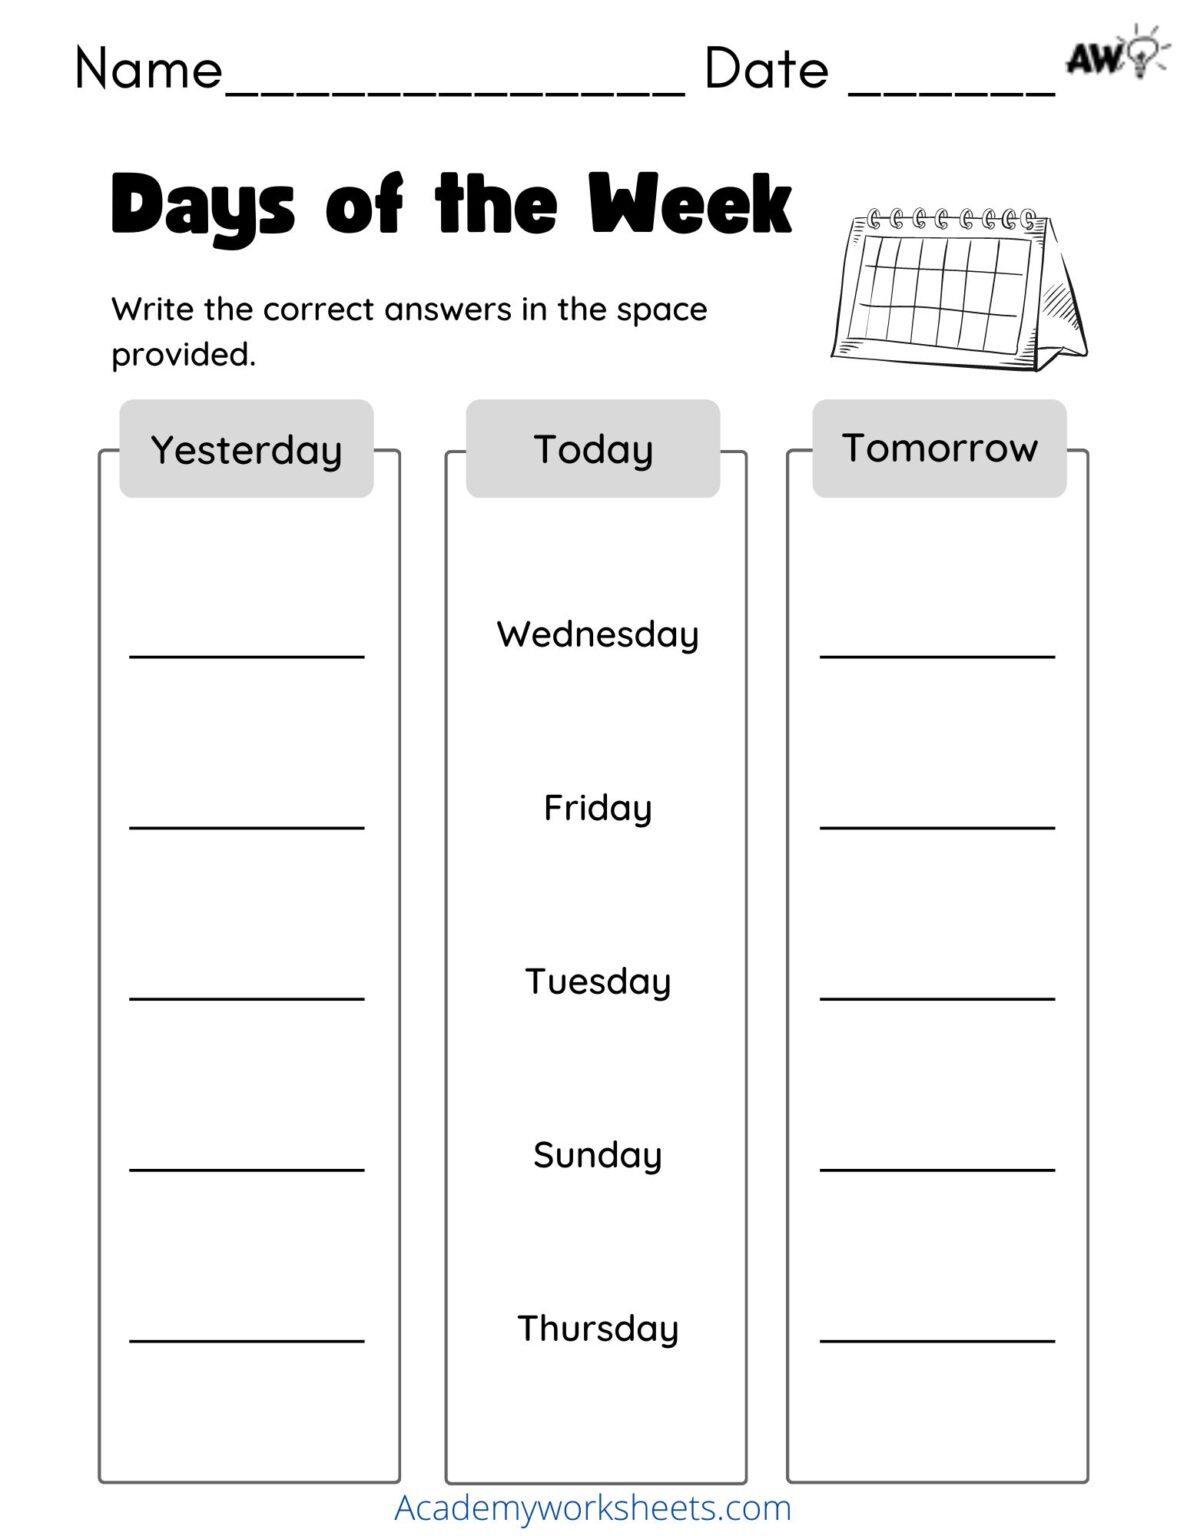 Days of the Week Worksheets PDF Academy Worksheets